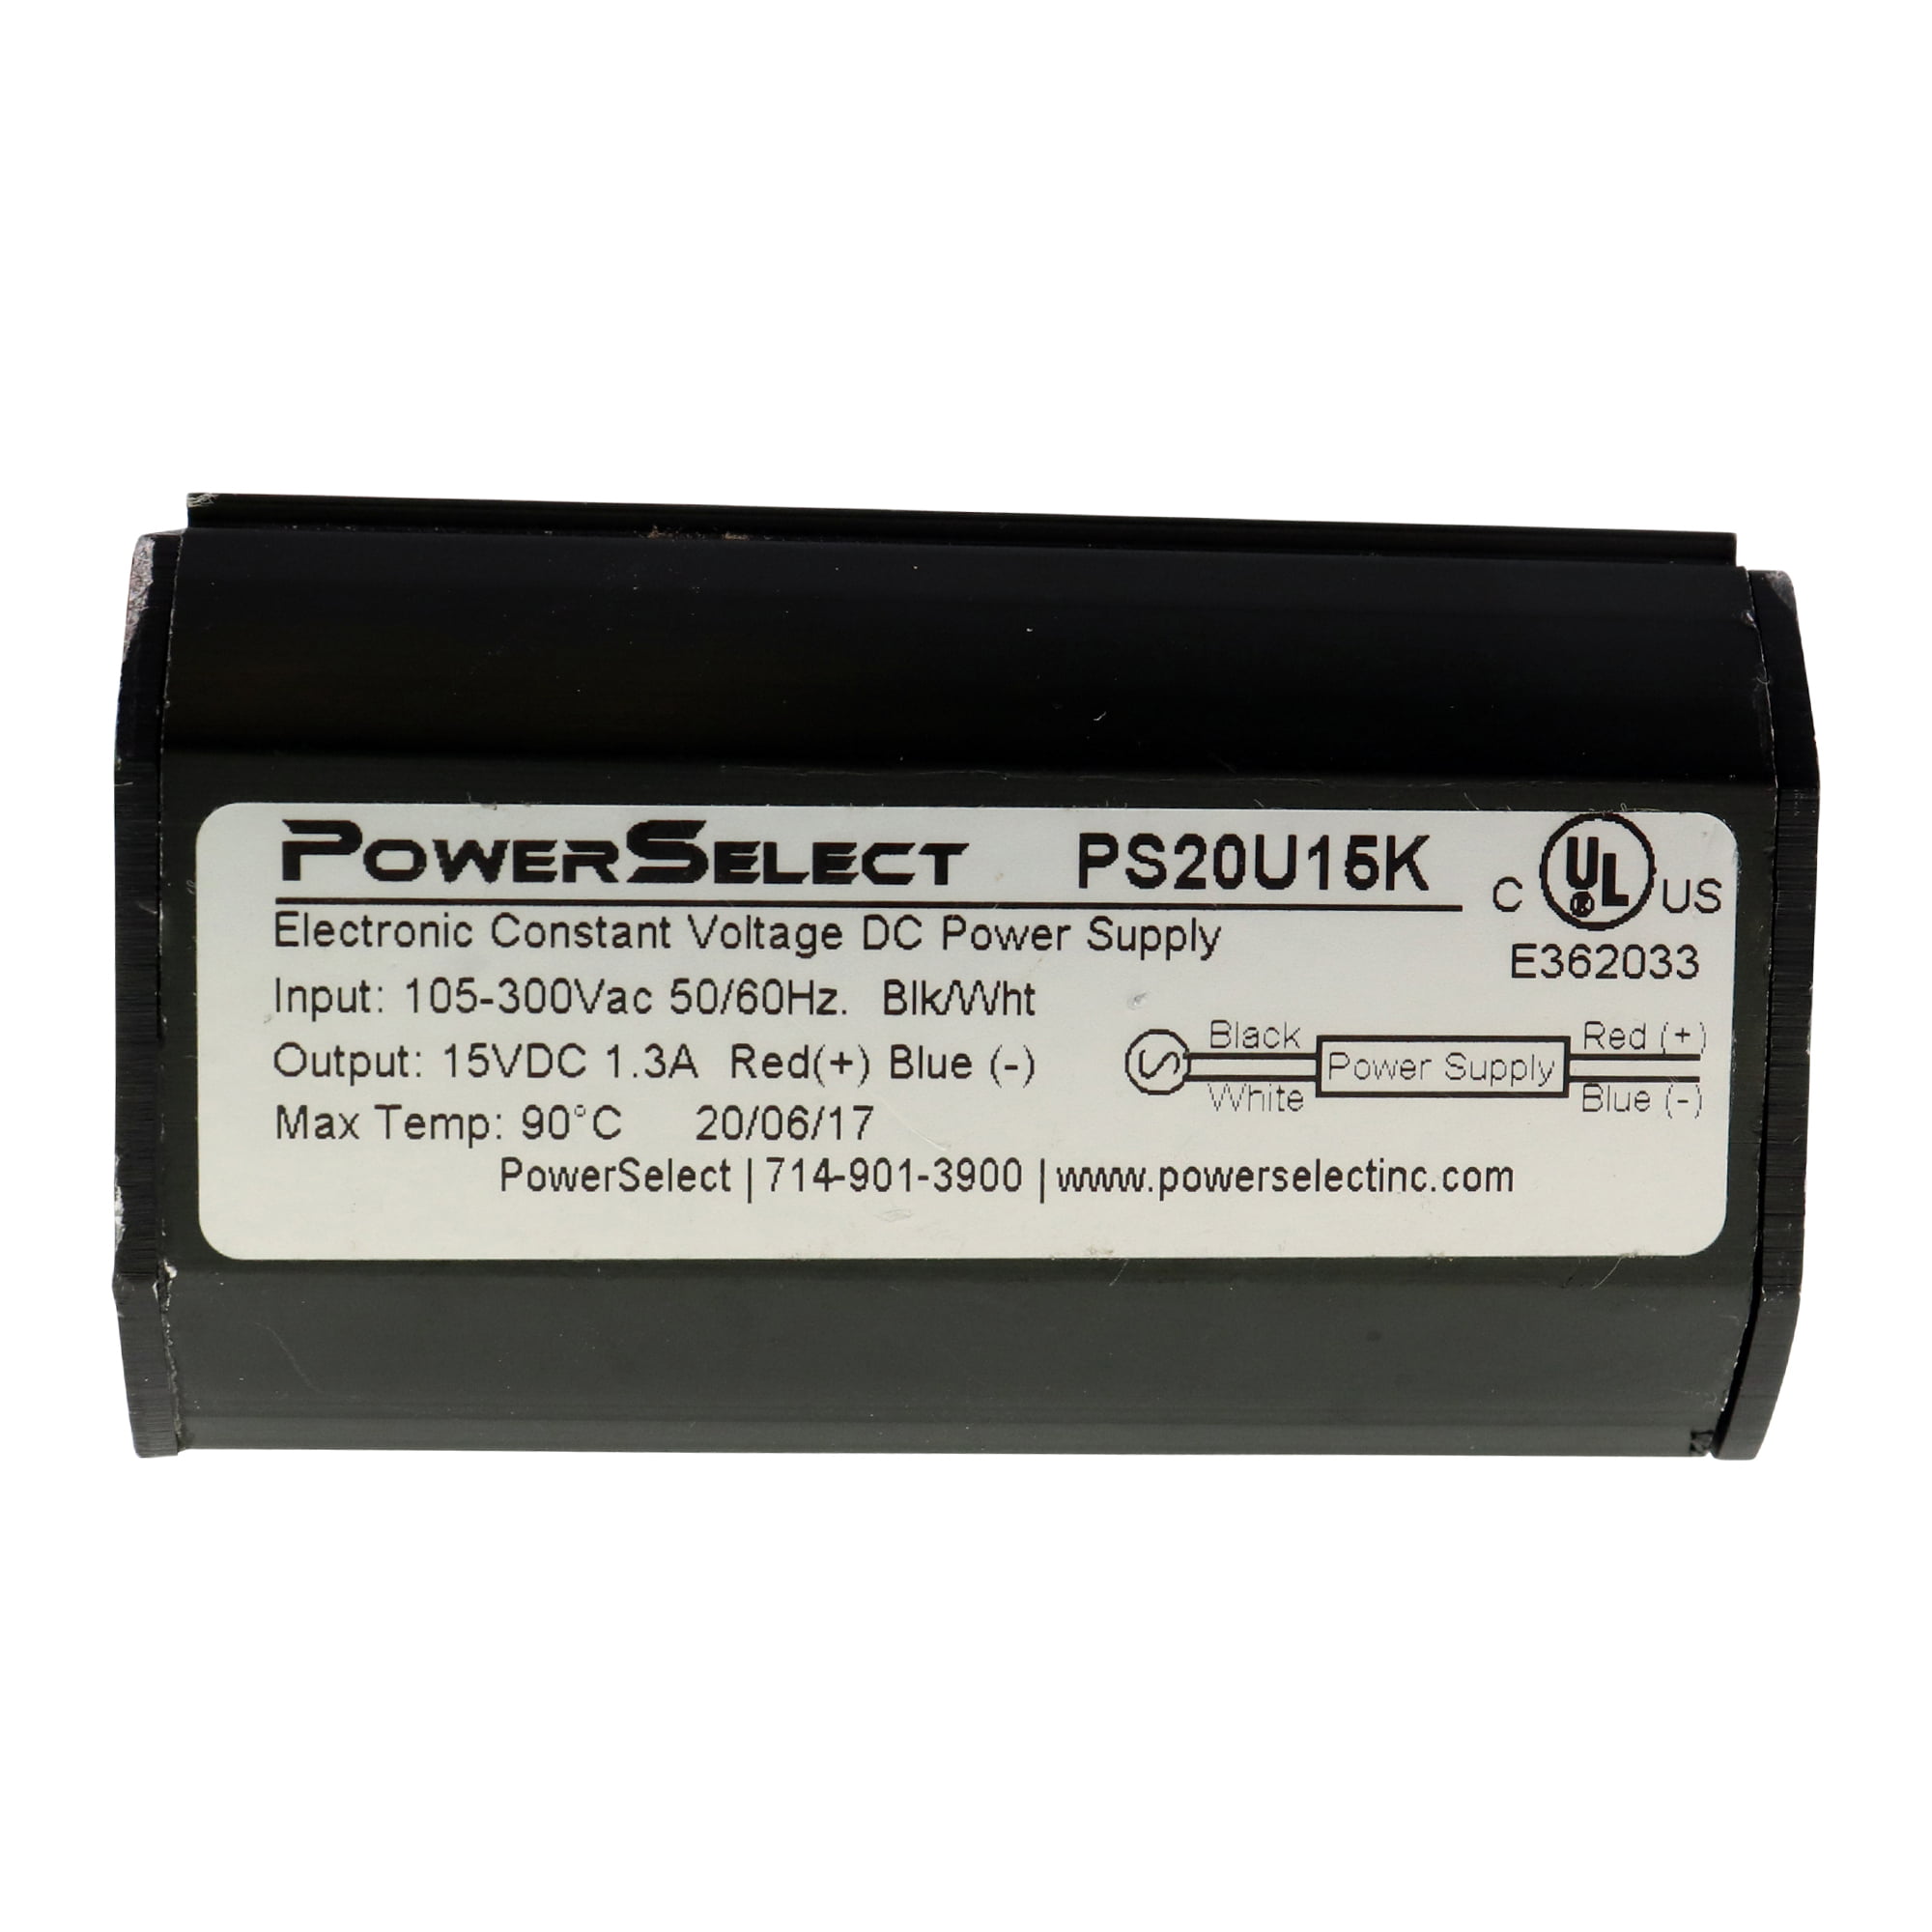 Power Select PS20U15K Constant Voltage LED Driver, 15Vdc 1.3A, 105